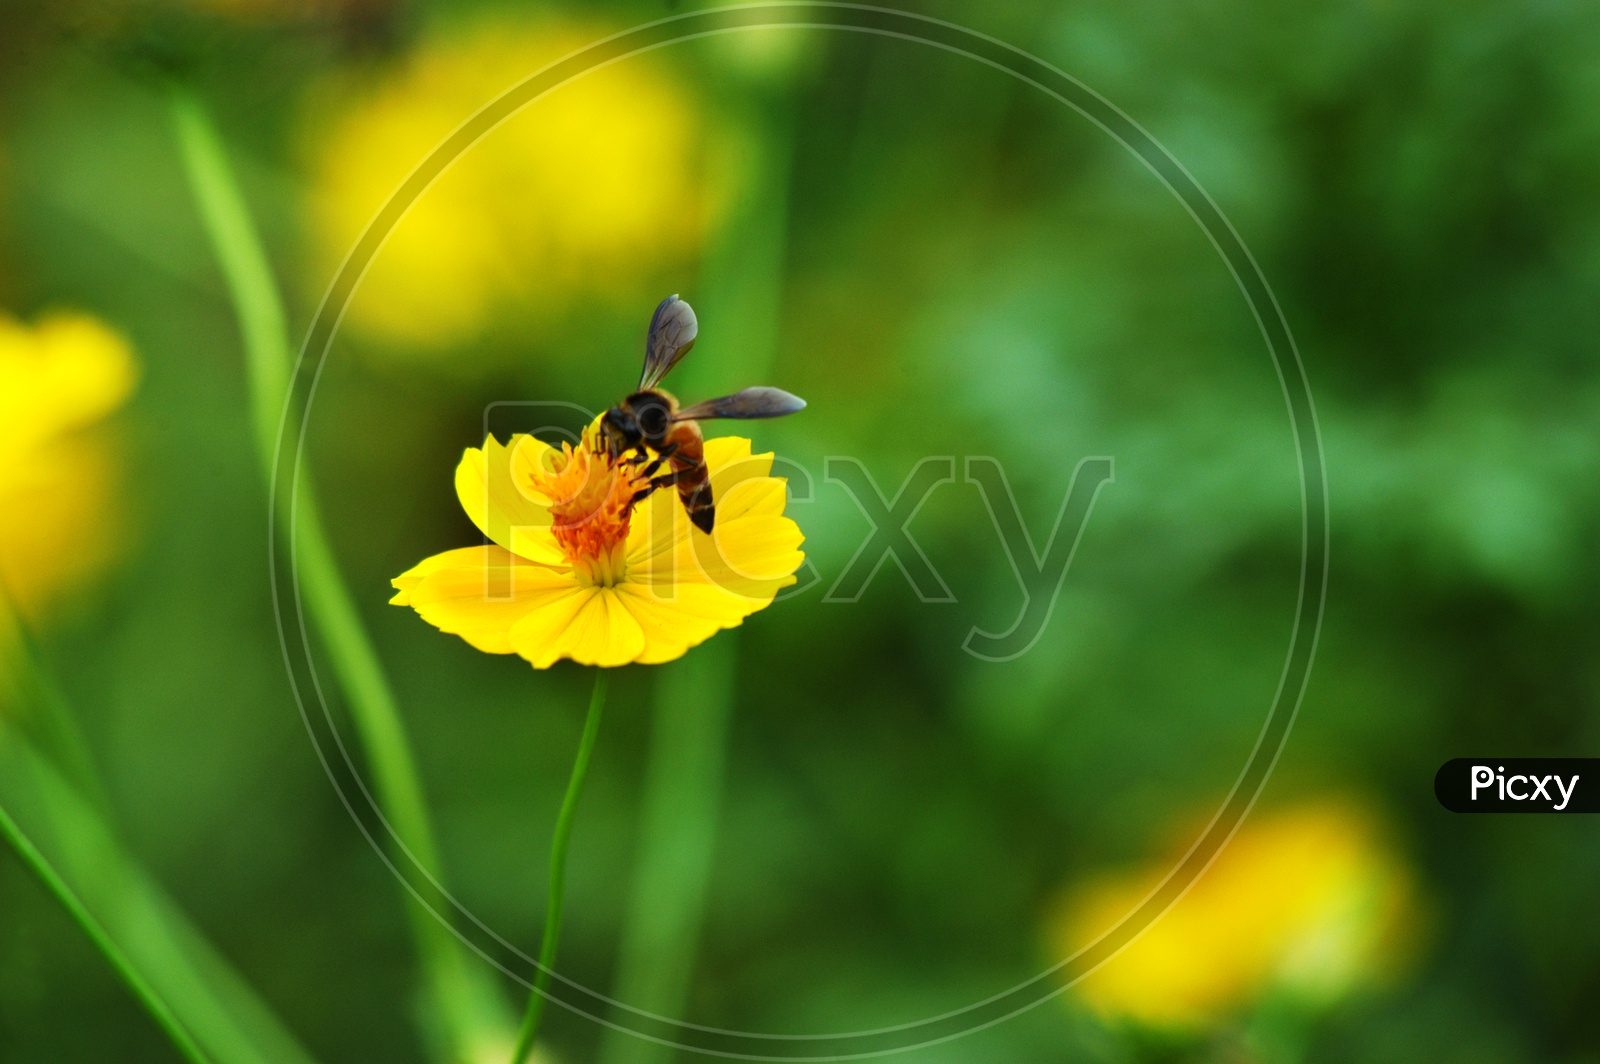 Honeybee on an yellow flower